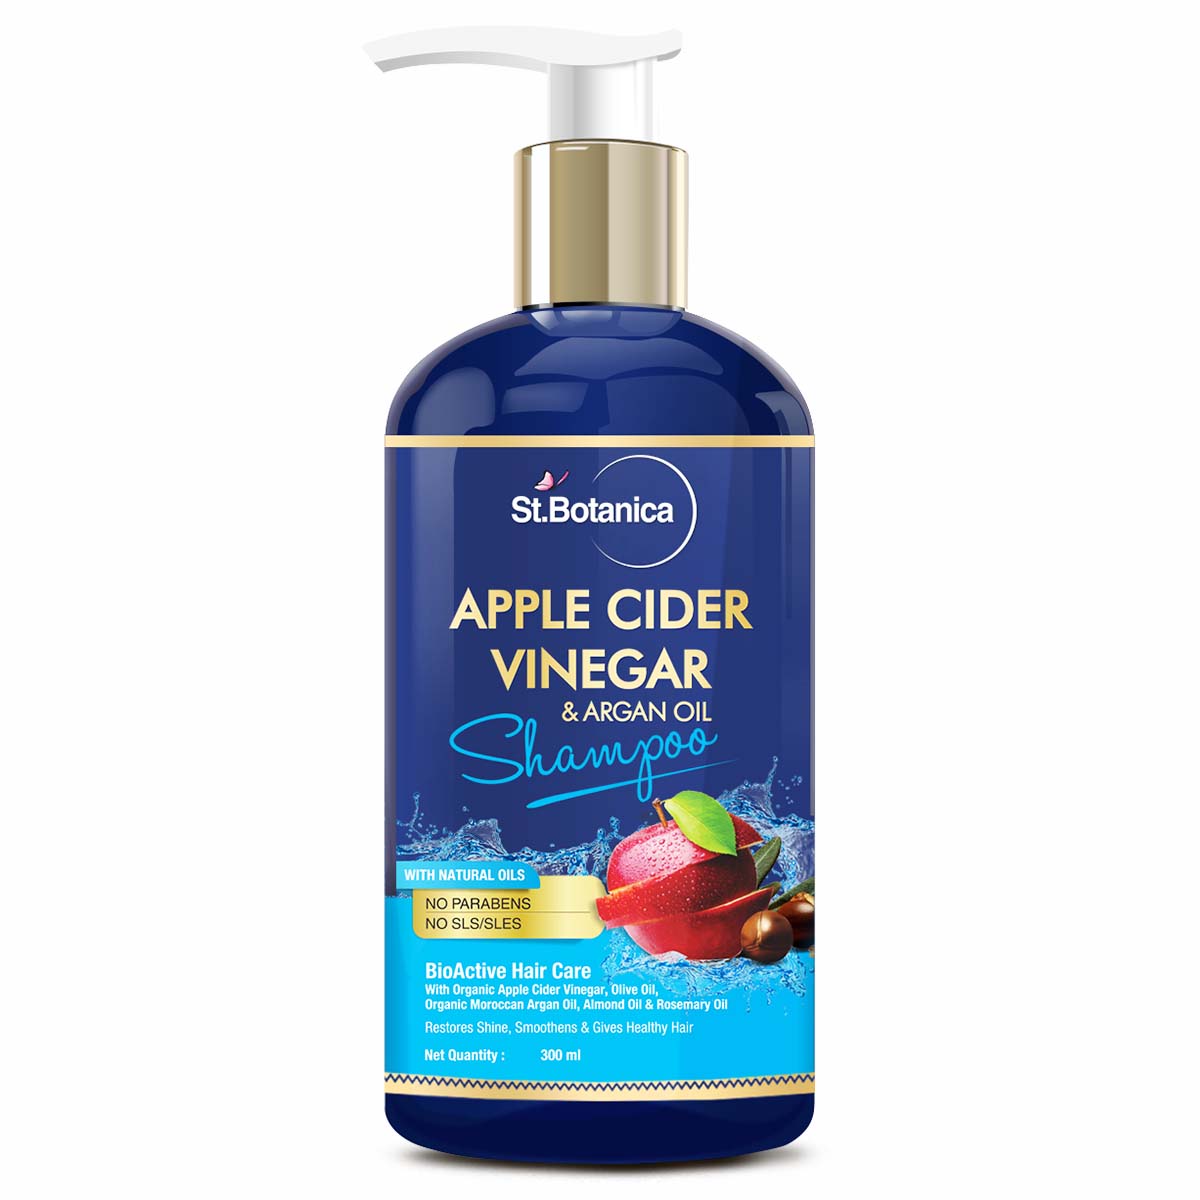 St.Botanica Apple Cider Vinegar & Organic Argan Oil Hair Shampoo - 300ml - No Sulphate, No Parabens, No Silicon